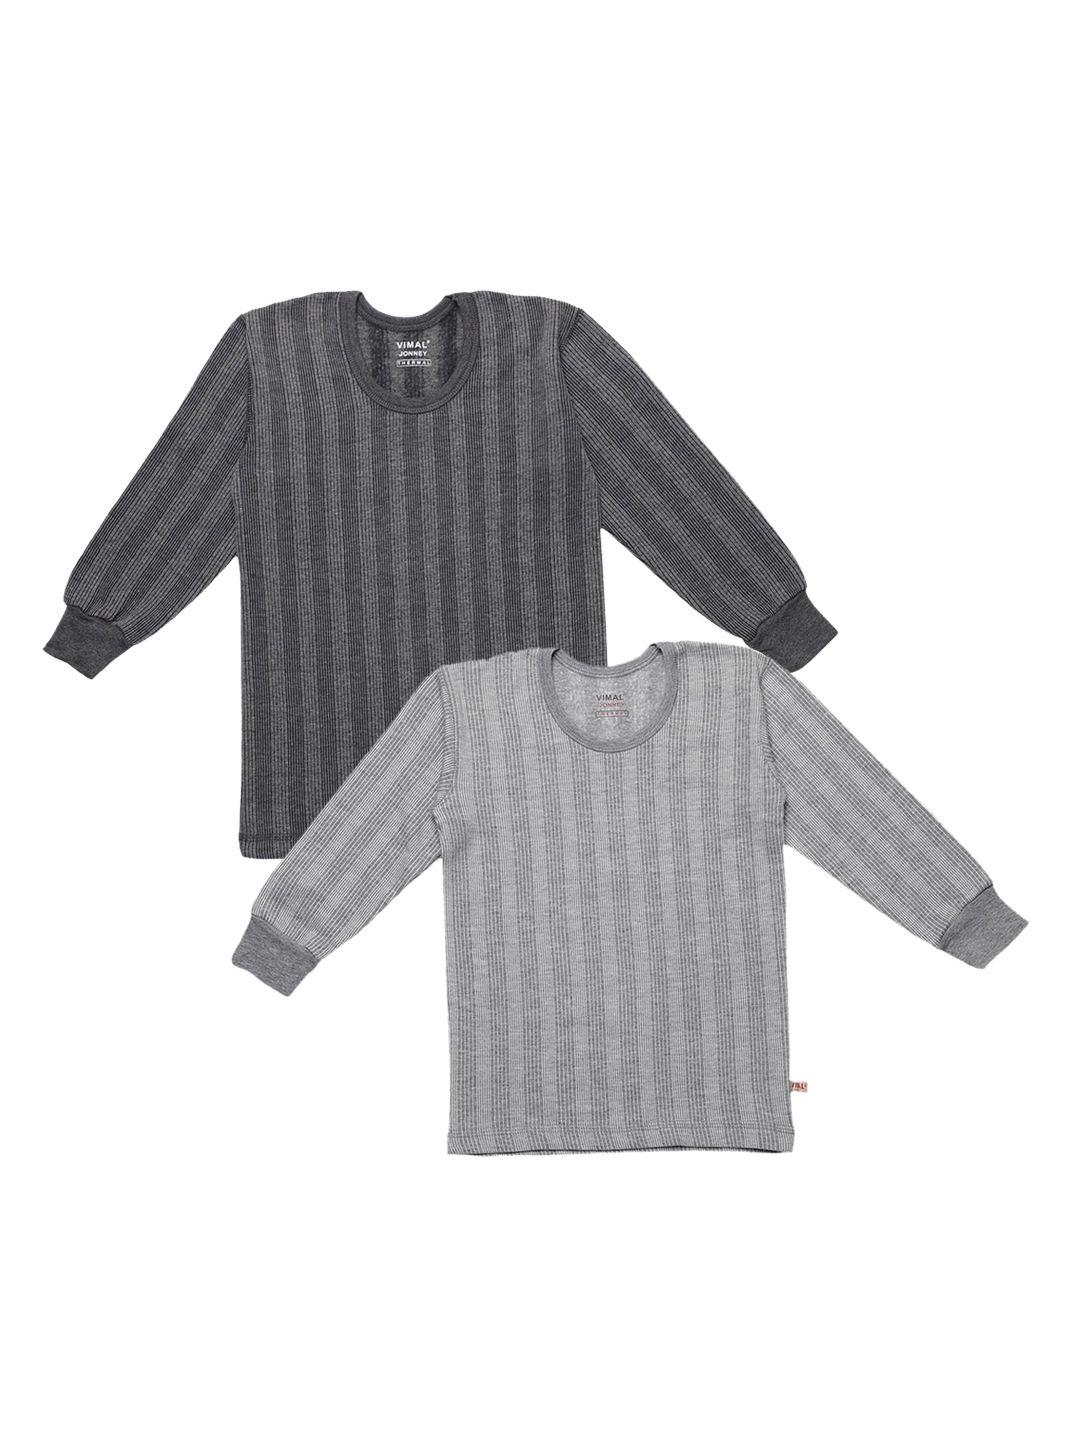 vimal-jonney-kids-pack-of-2-self-striped-thermal-t-shirts